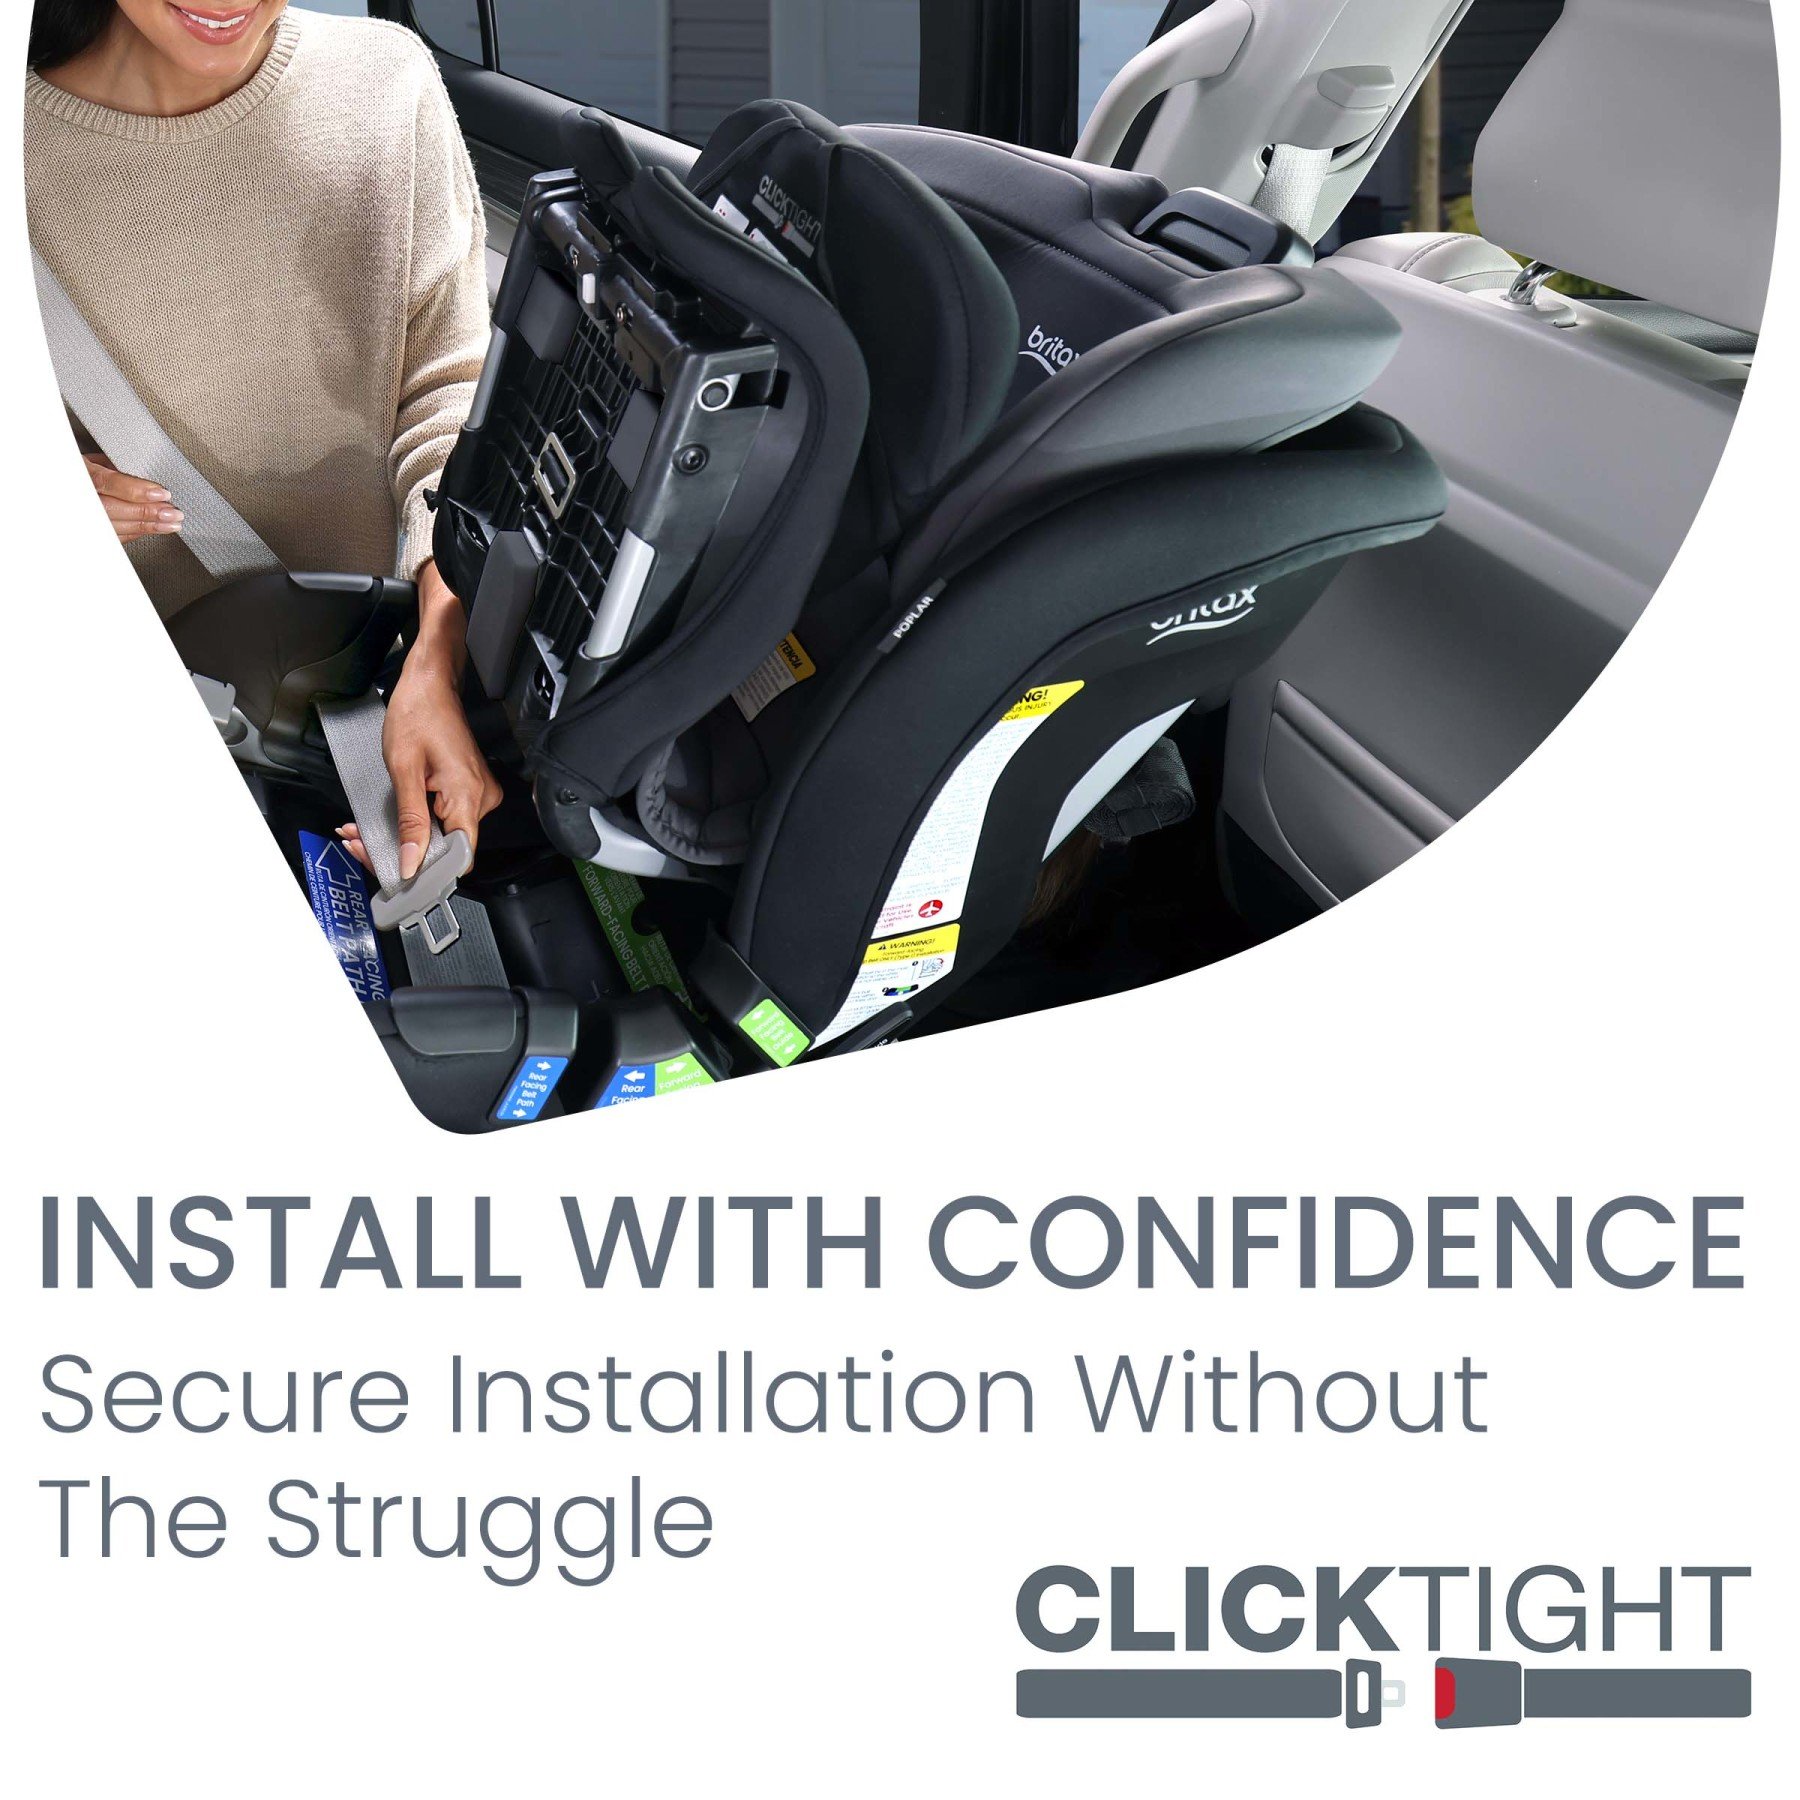 ClickTight Installation on Stone Onyx Poplar Convertible Car Seat